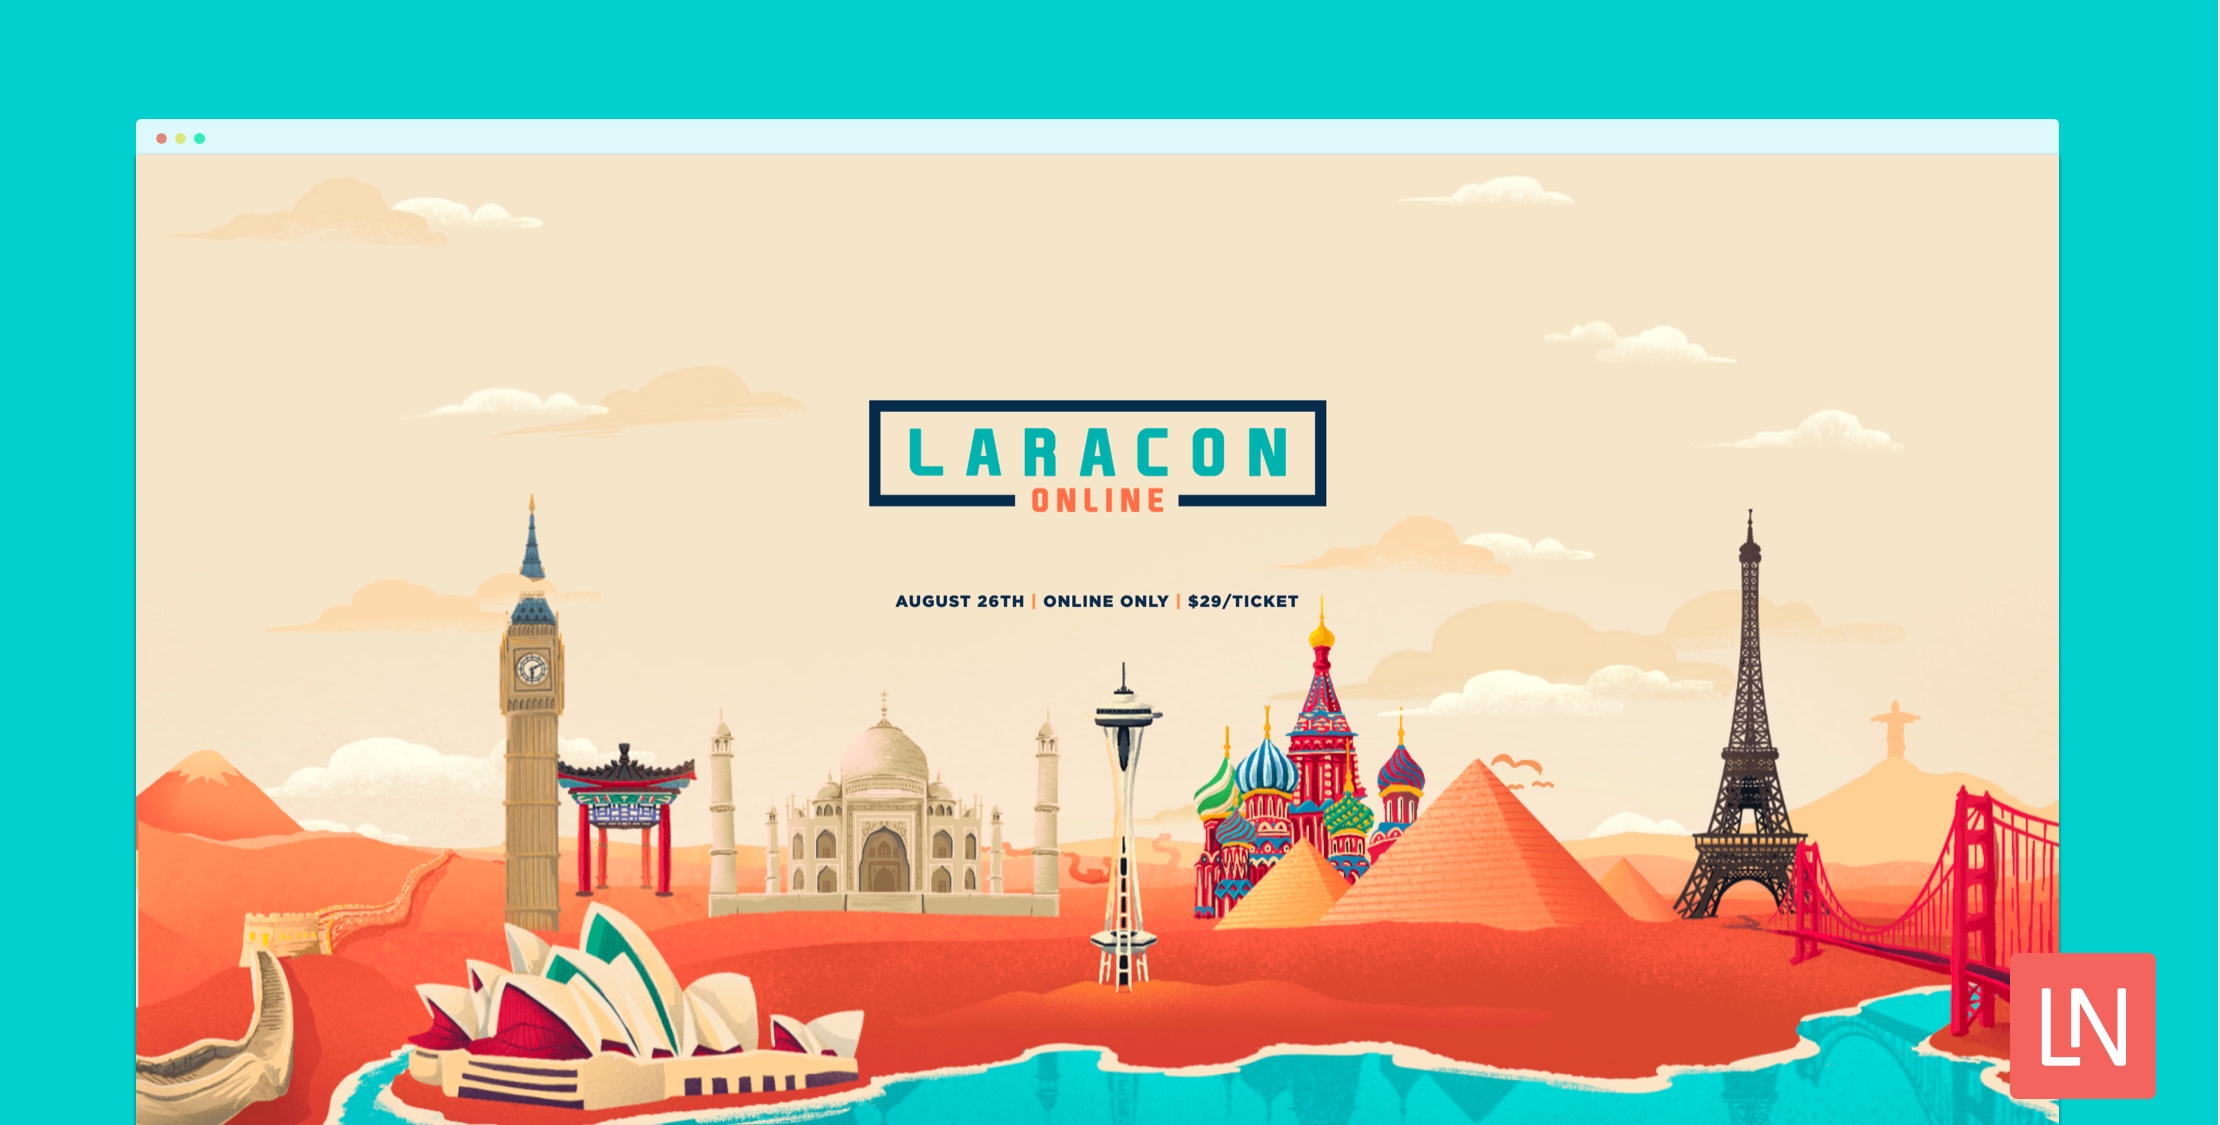 Laracon Online is tomorrow! image